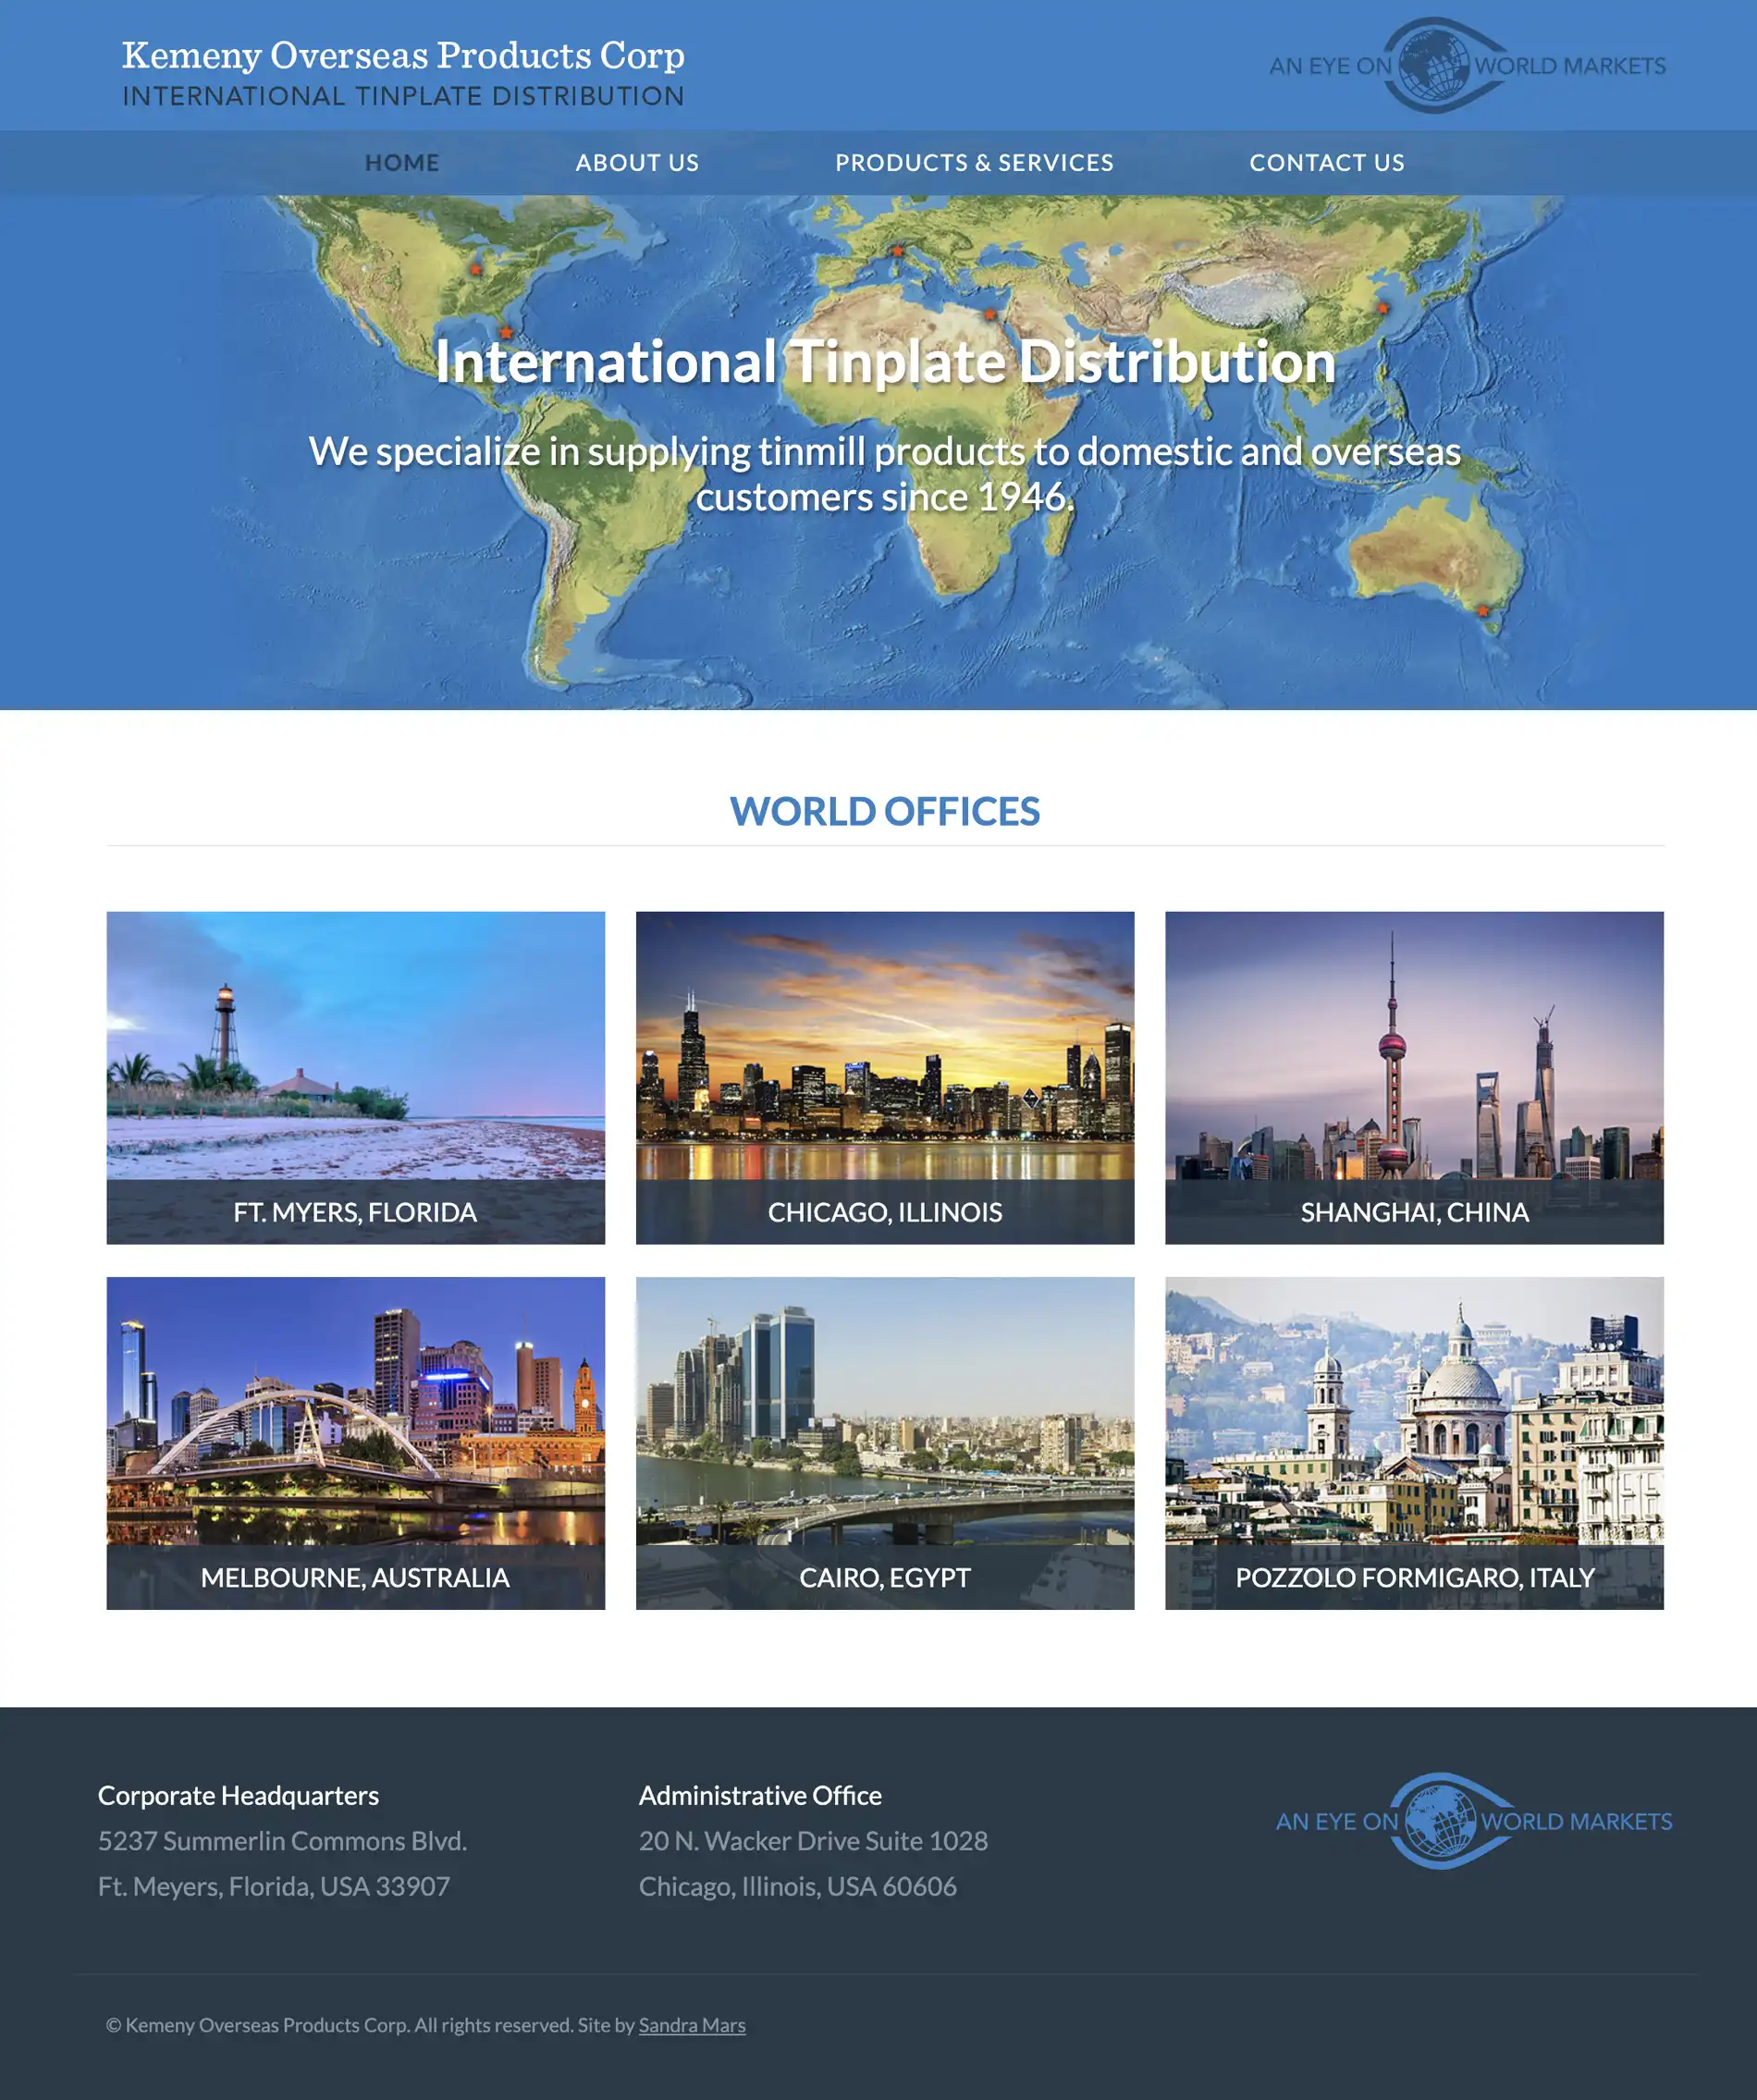 Kemeny Overseas Products homepage image